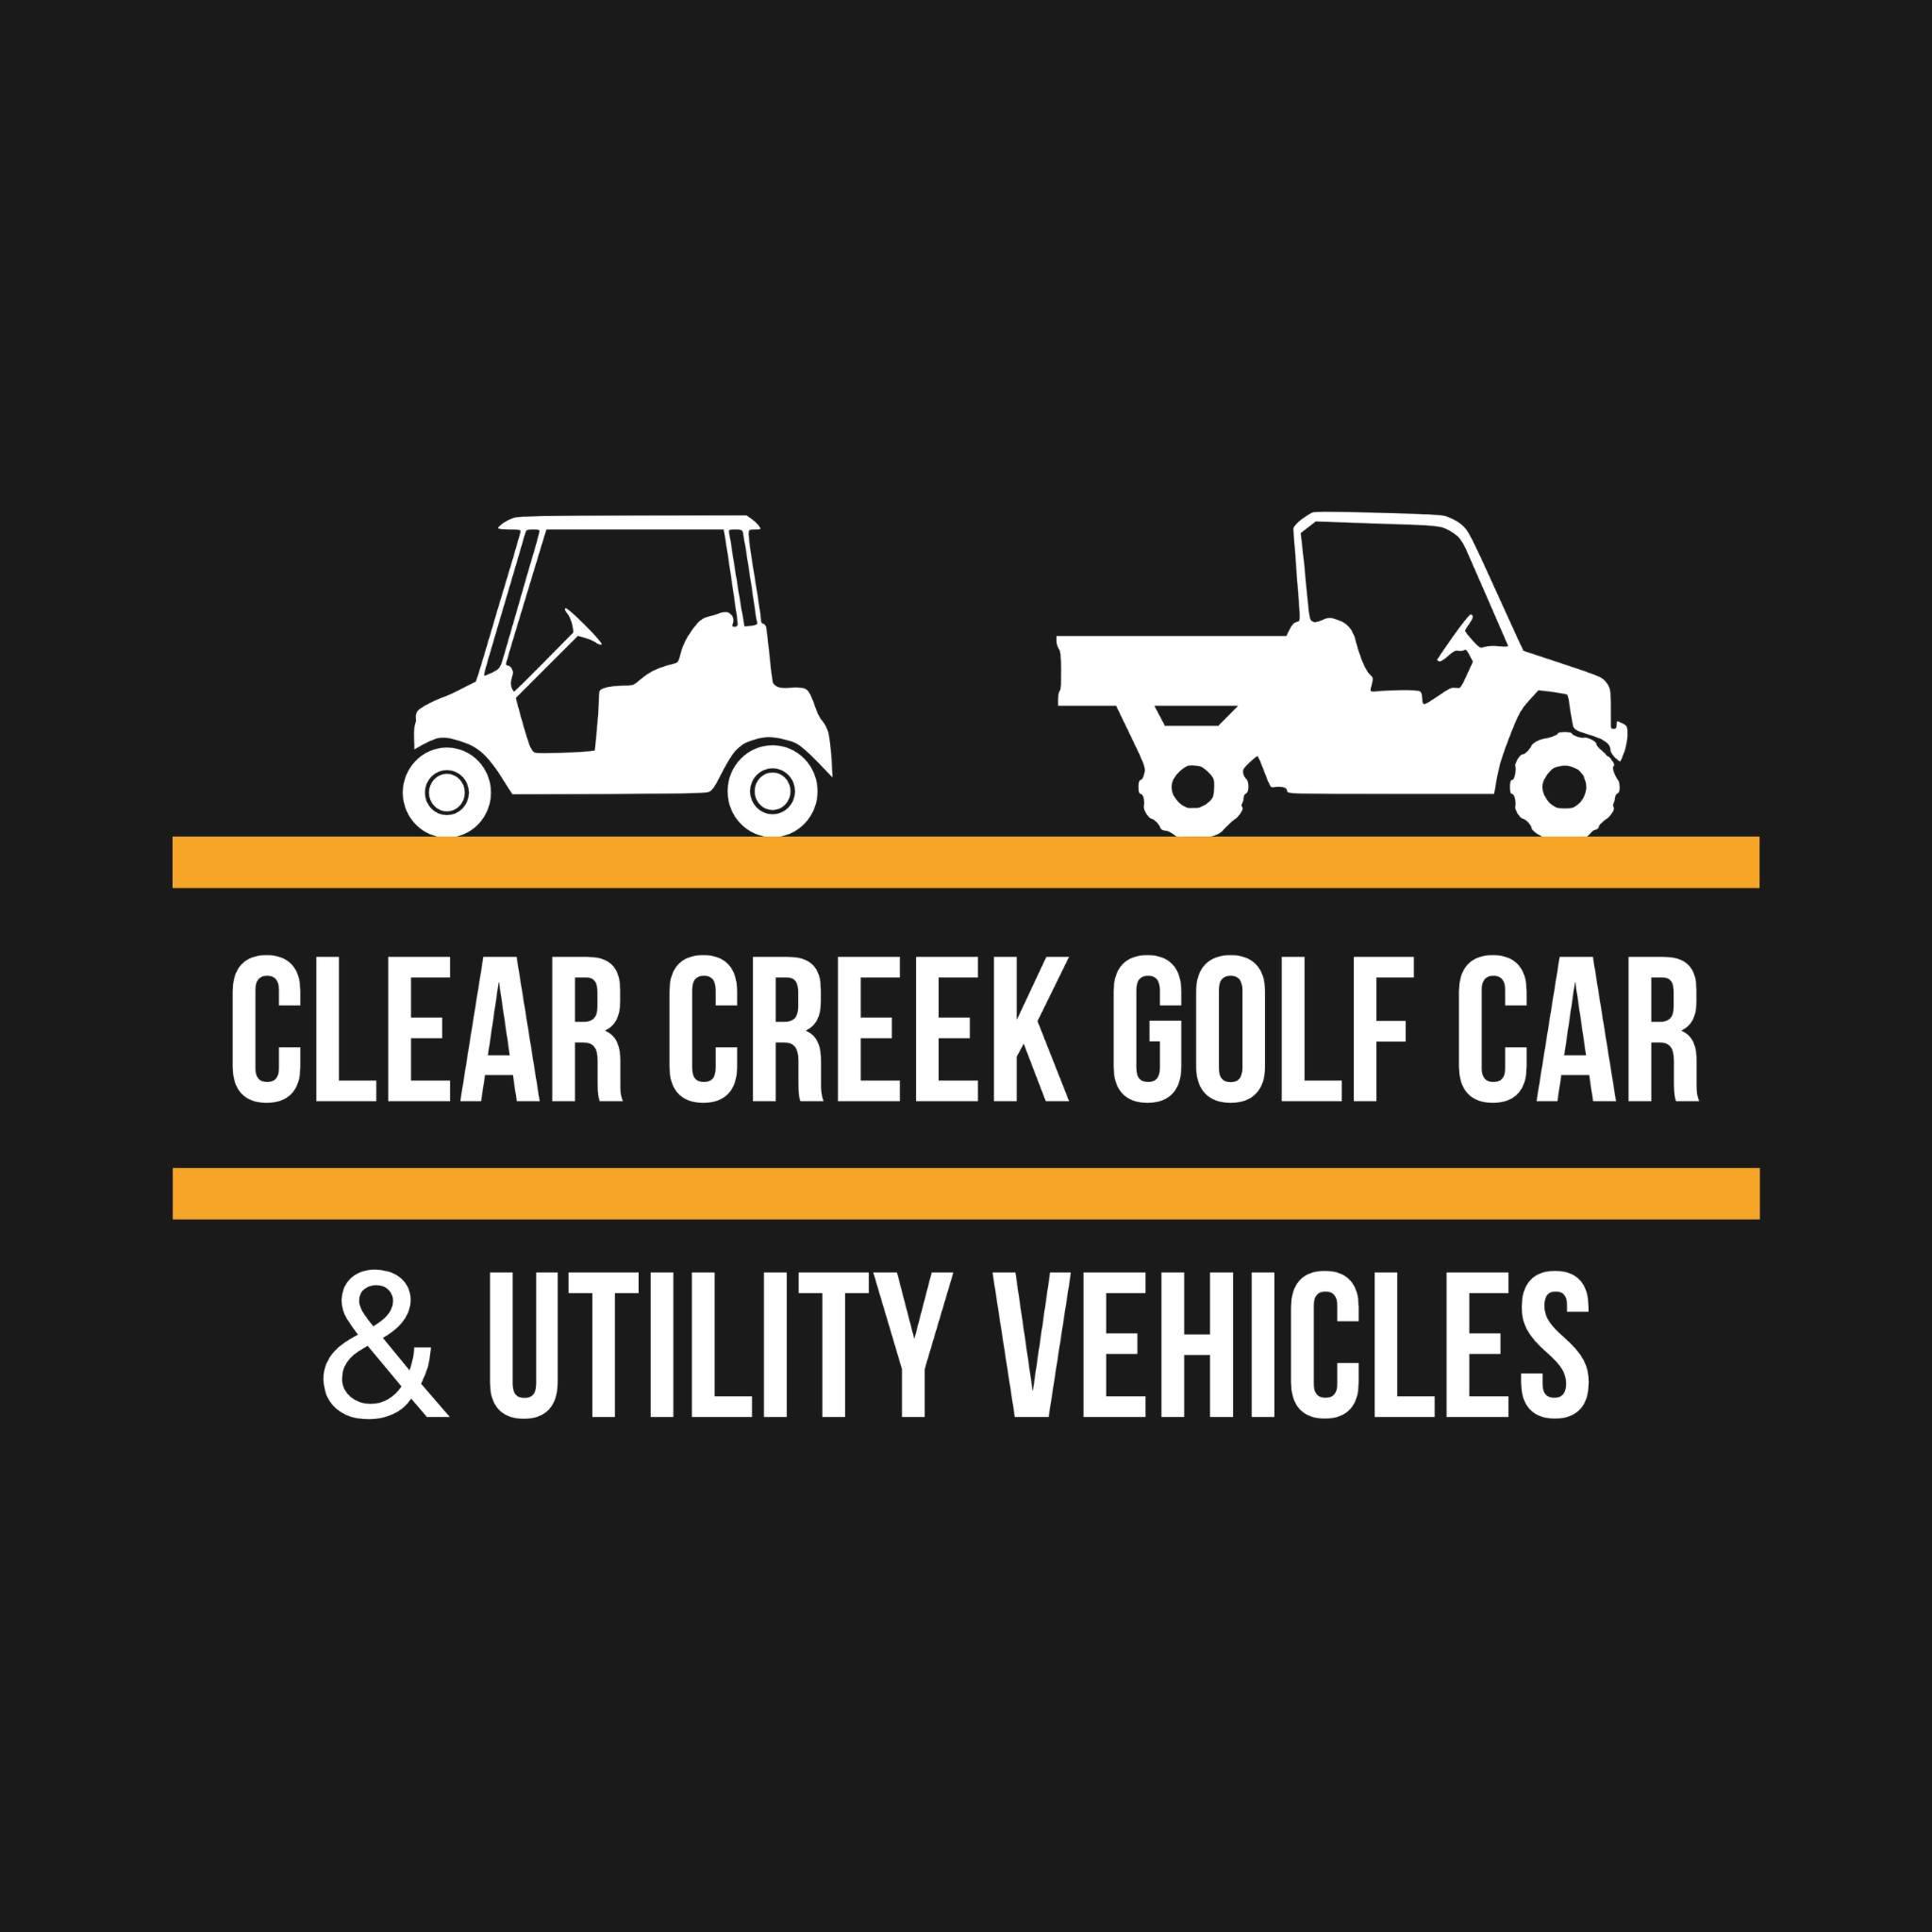 Clear Creek Golf Car & Utility Vehicles - West Plains